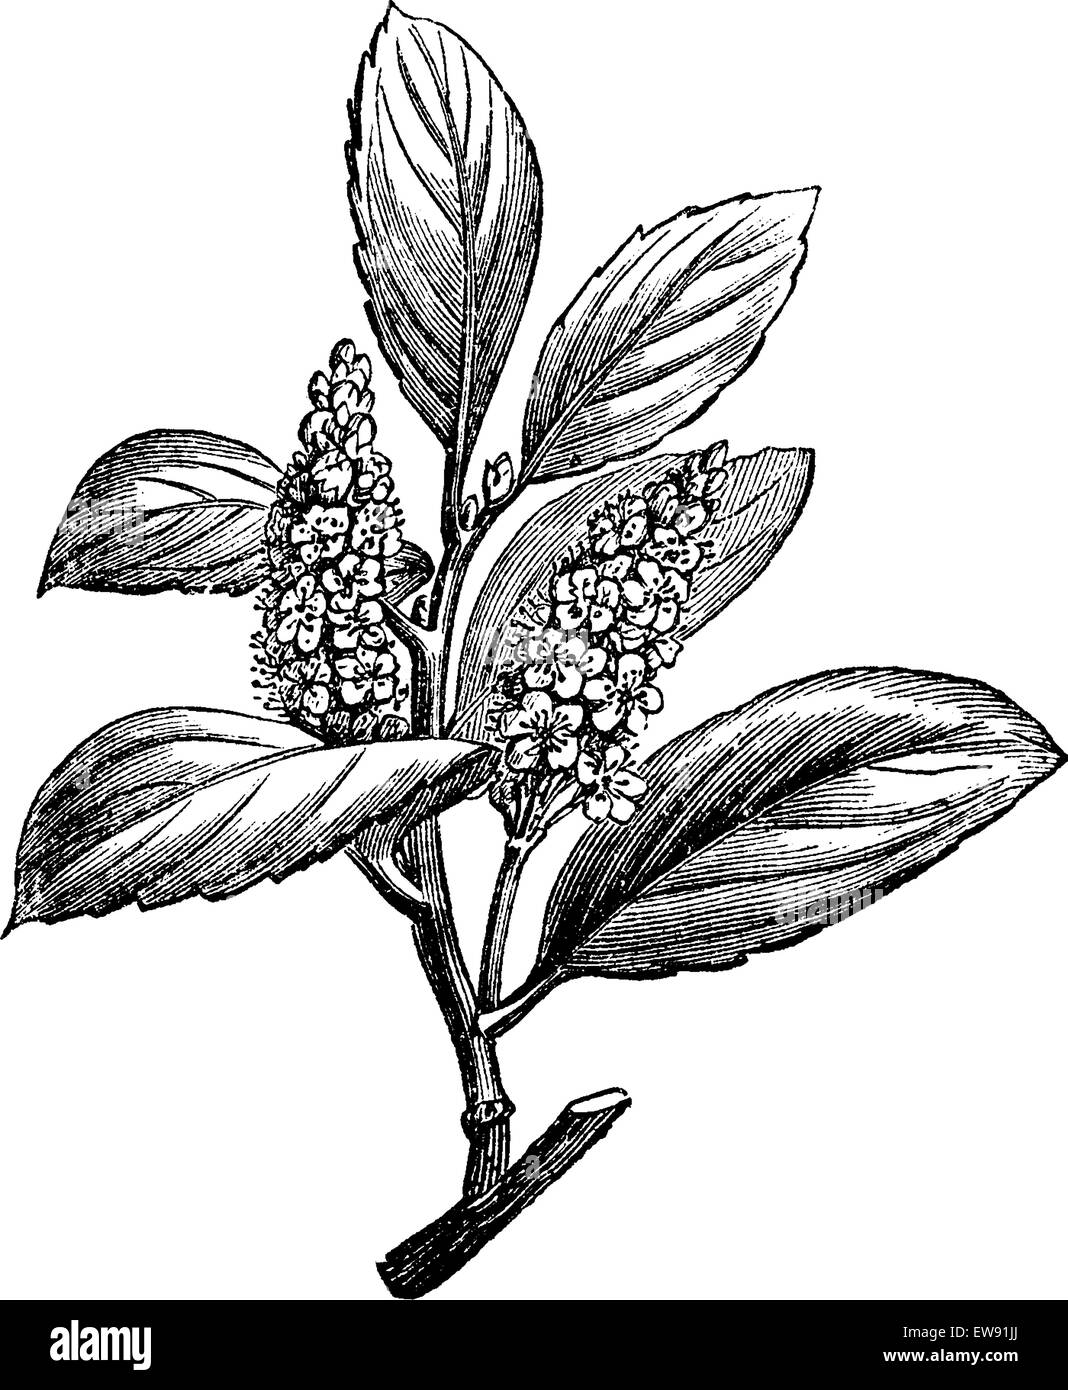 Cherry Laurel or Prunus laurocerasus, showing flowers, vintage engraved illustration. Usual Medicine Dictionary by Dr Labarthe - Stock Vector